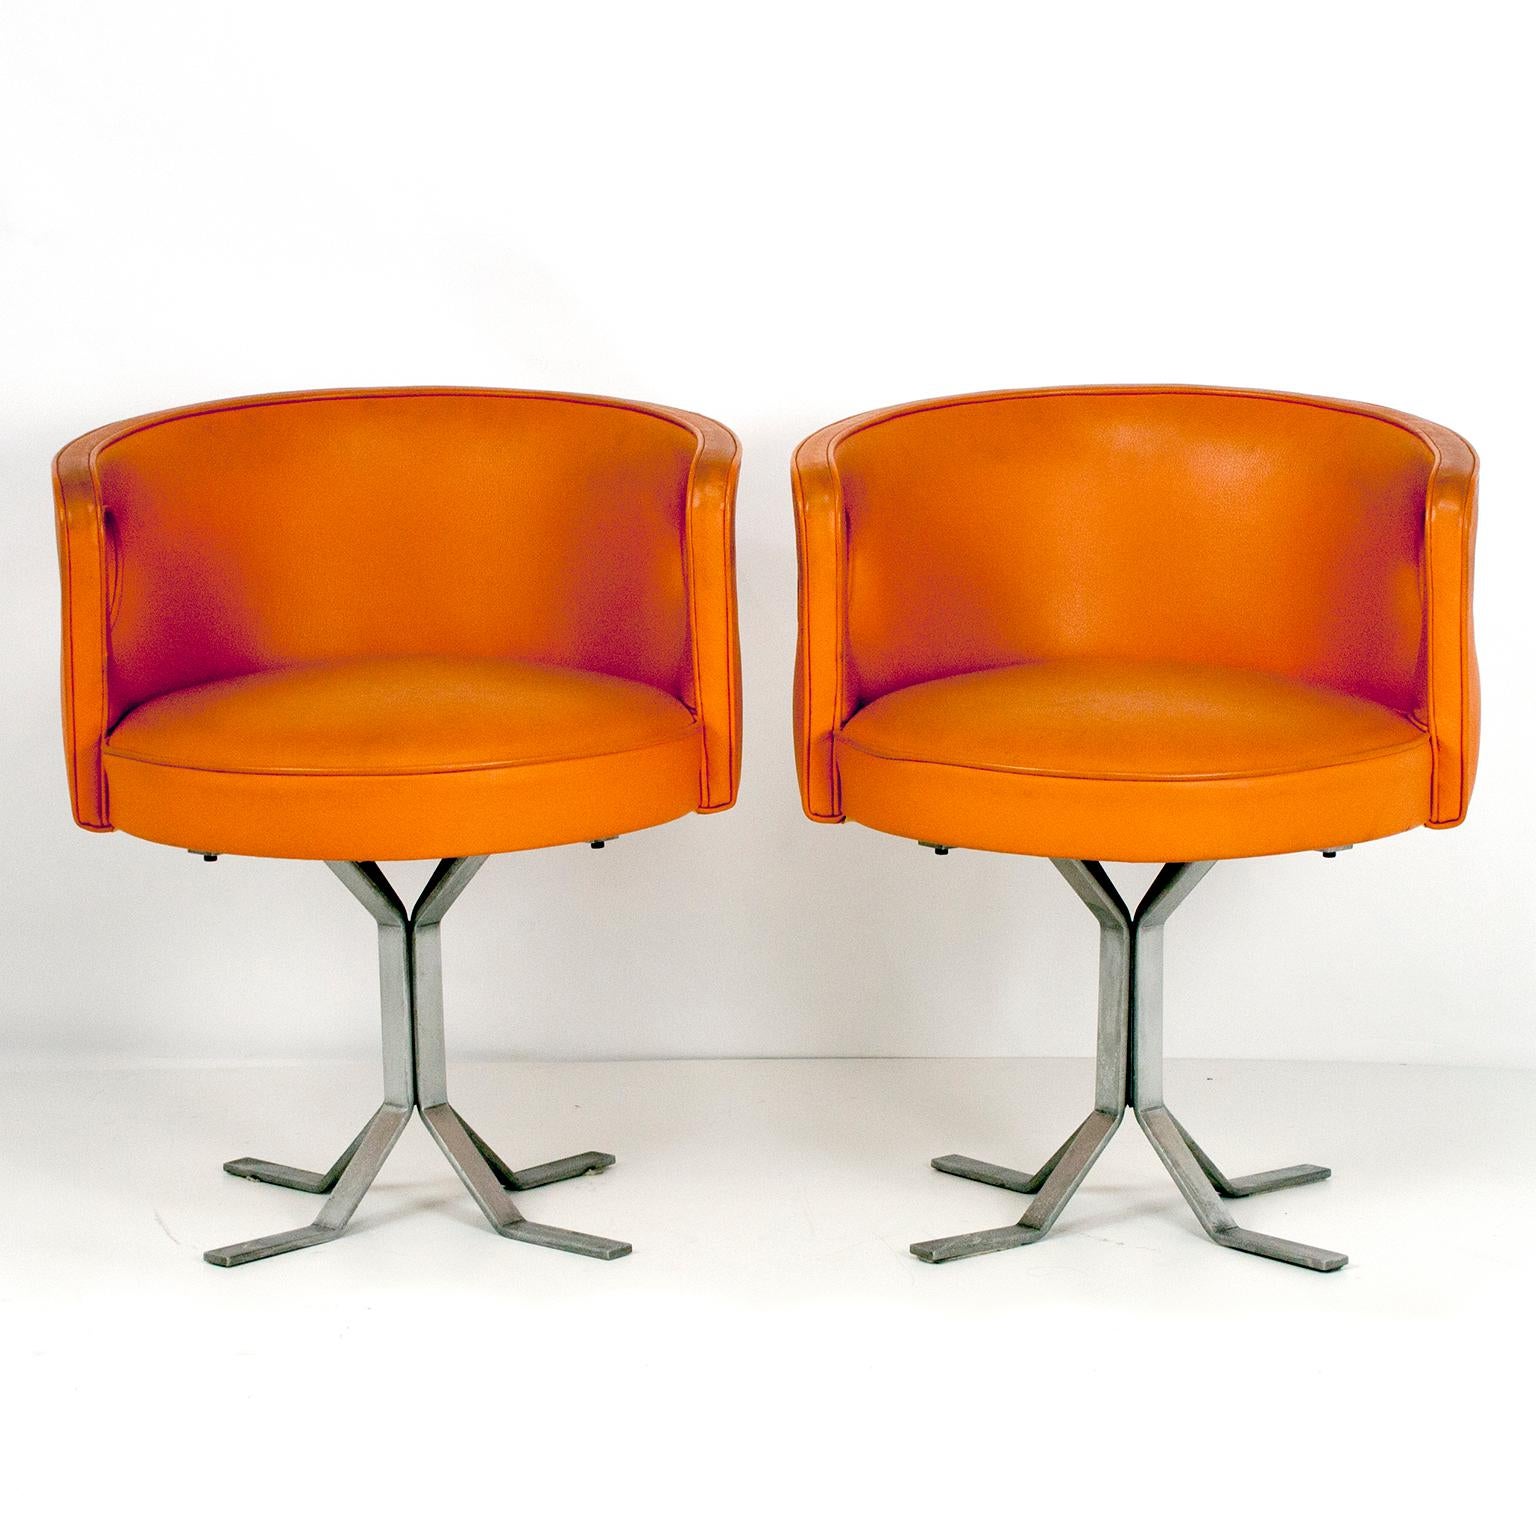 Mid-Century Modern Jordi Vilanova pair of Midcentury Orange Leather Chairs, 1970s